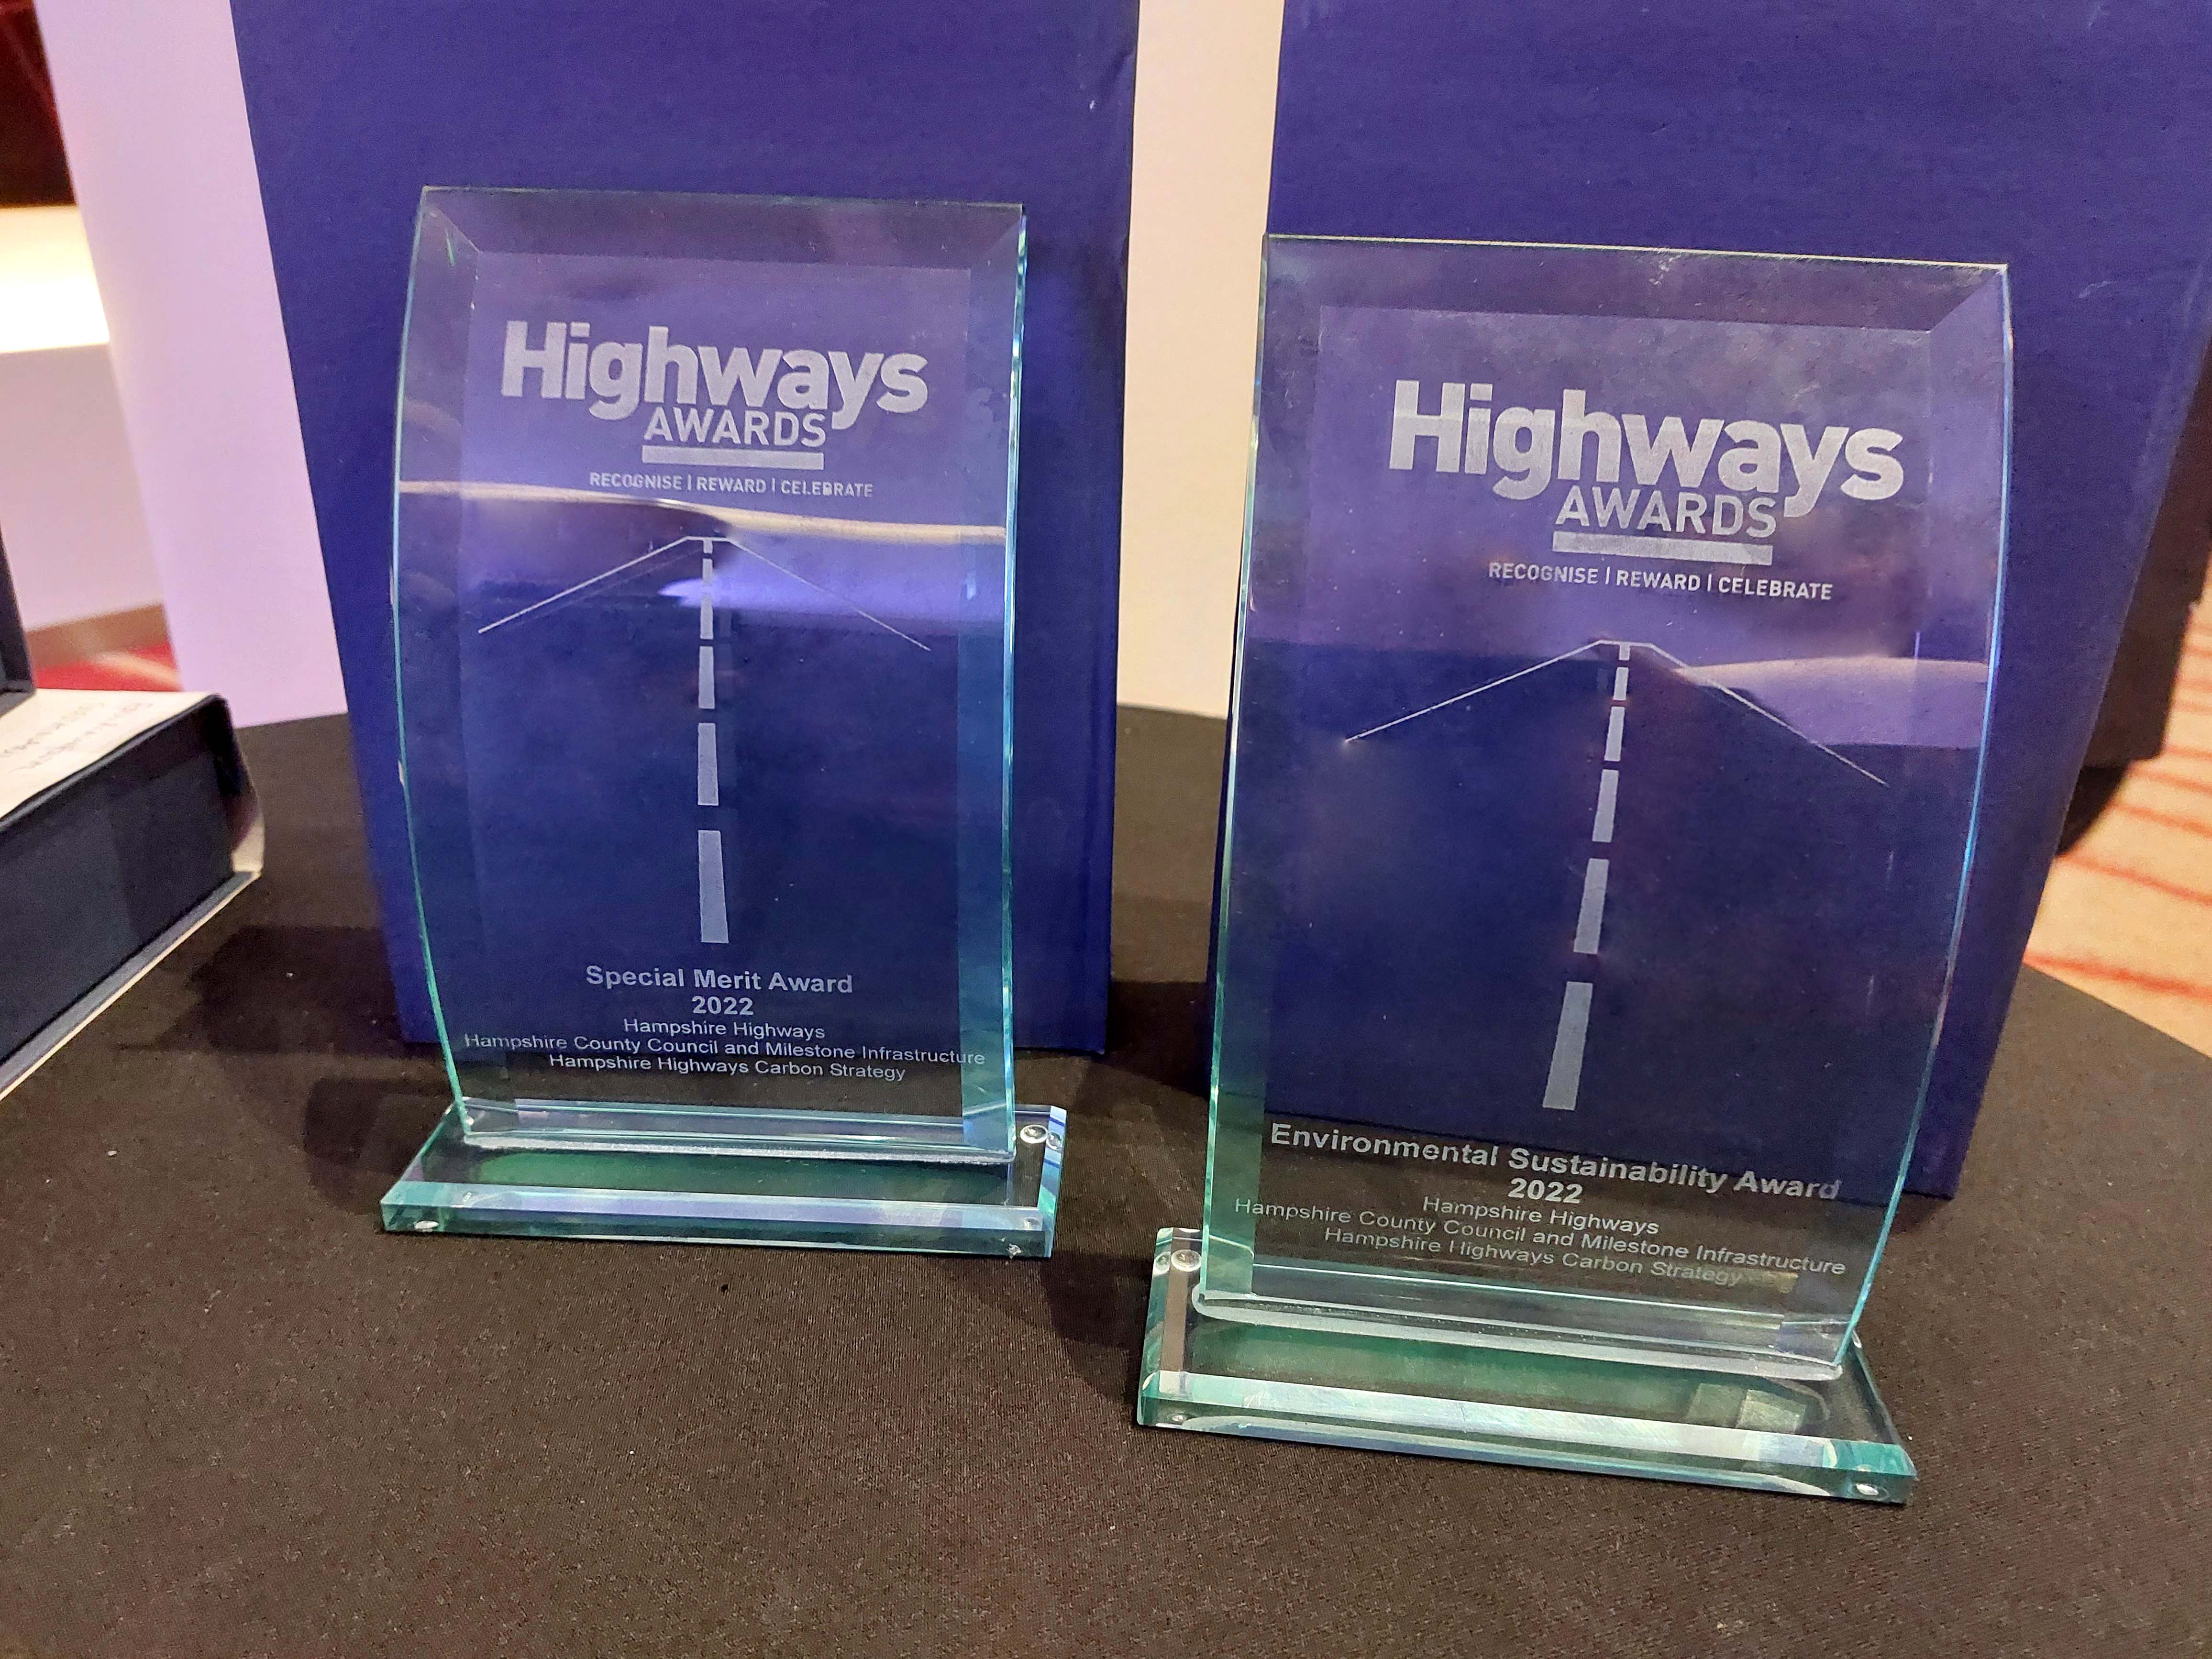 Milestone makes its mark at the Highways Awards